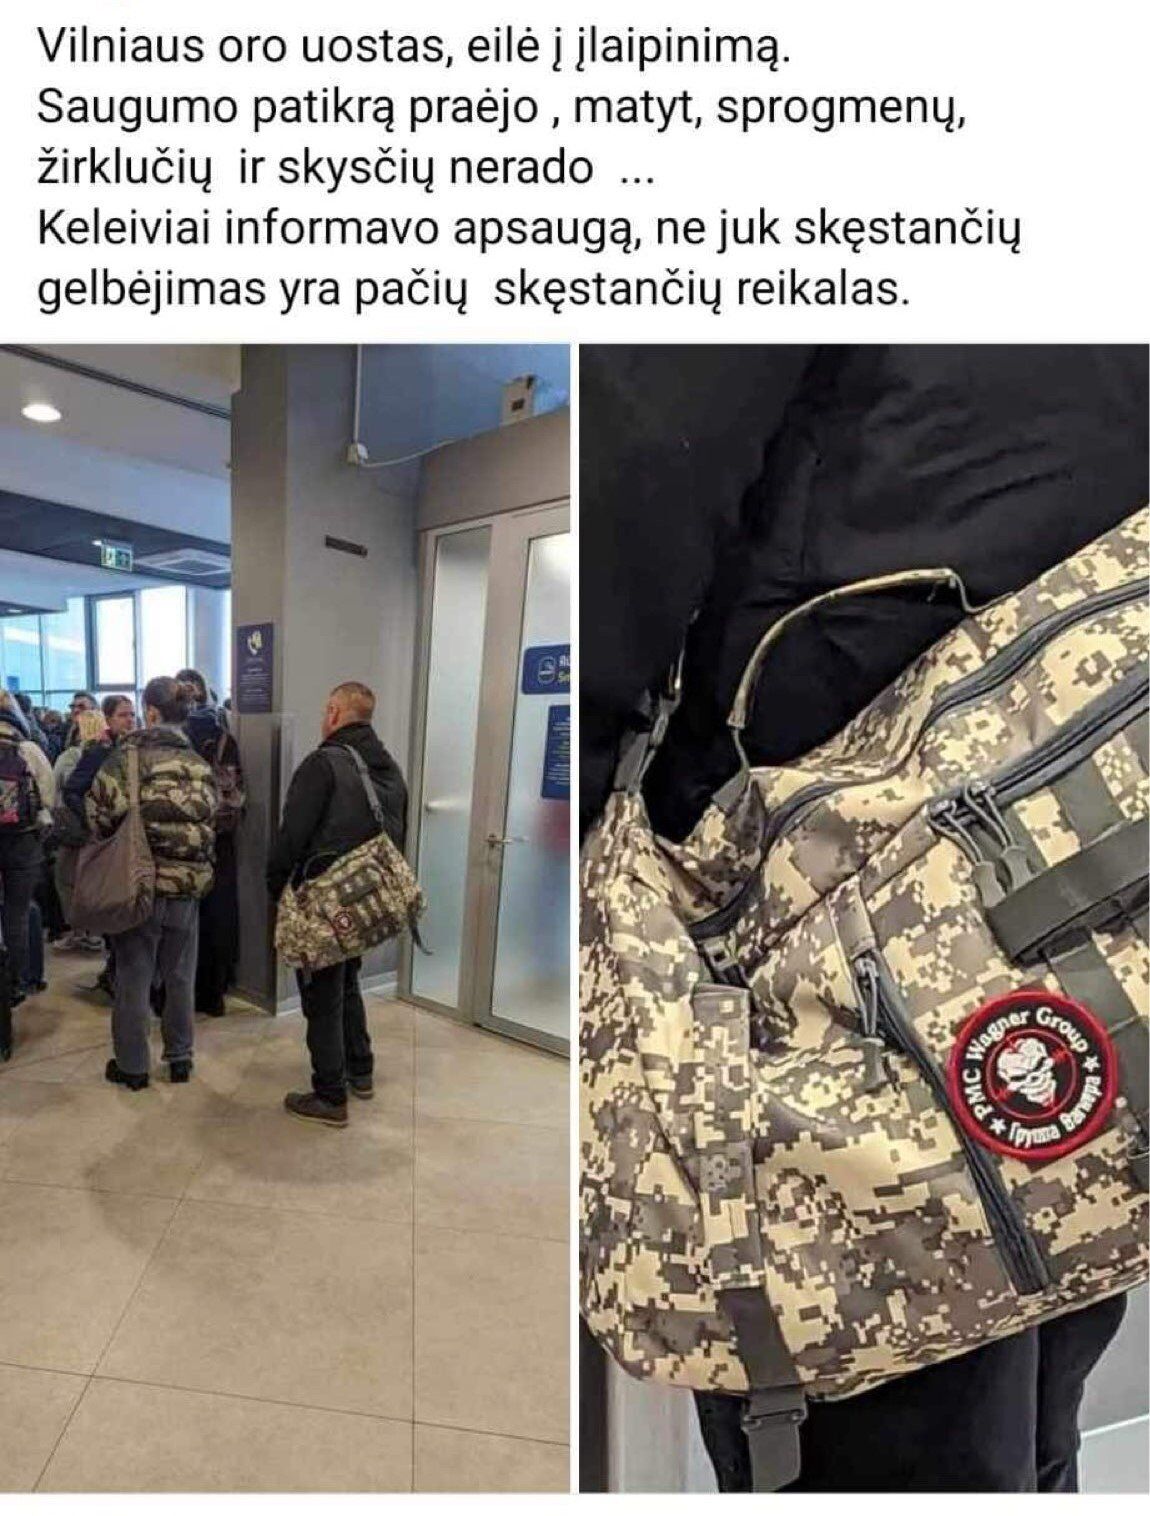 В аэропорту Вильнюса мужчину сняли с самолета и оштрафовали за символику ЧВК "Вагнер". Фото